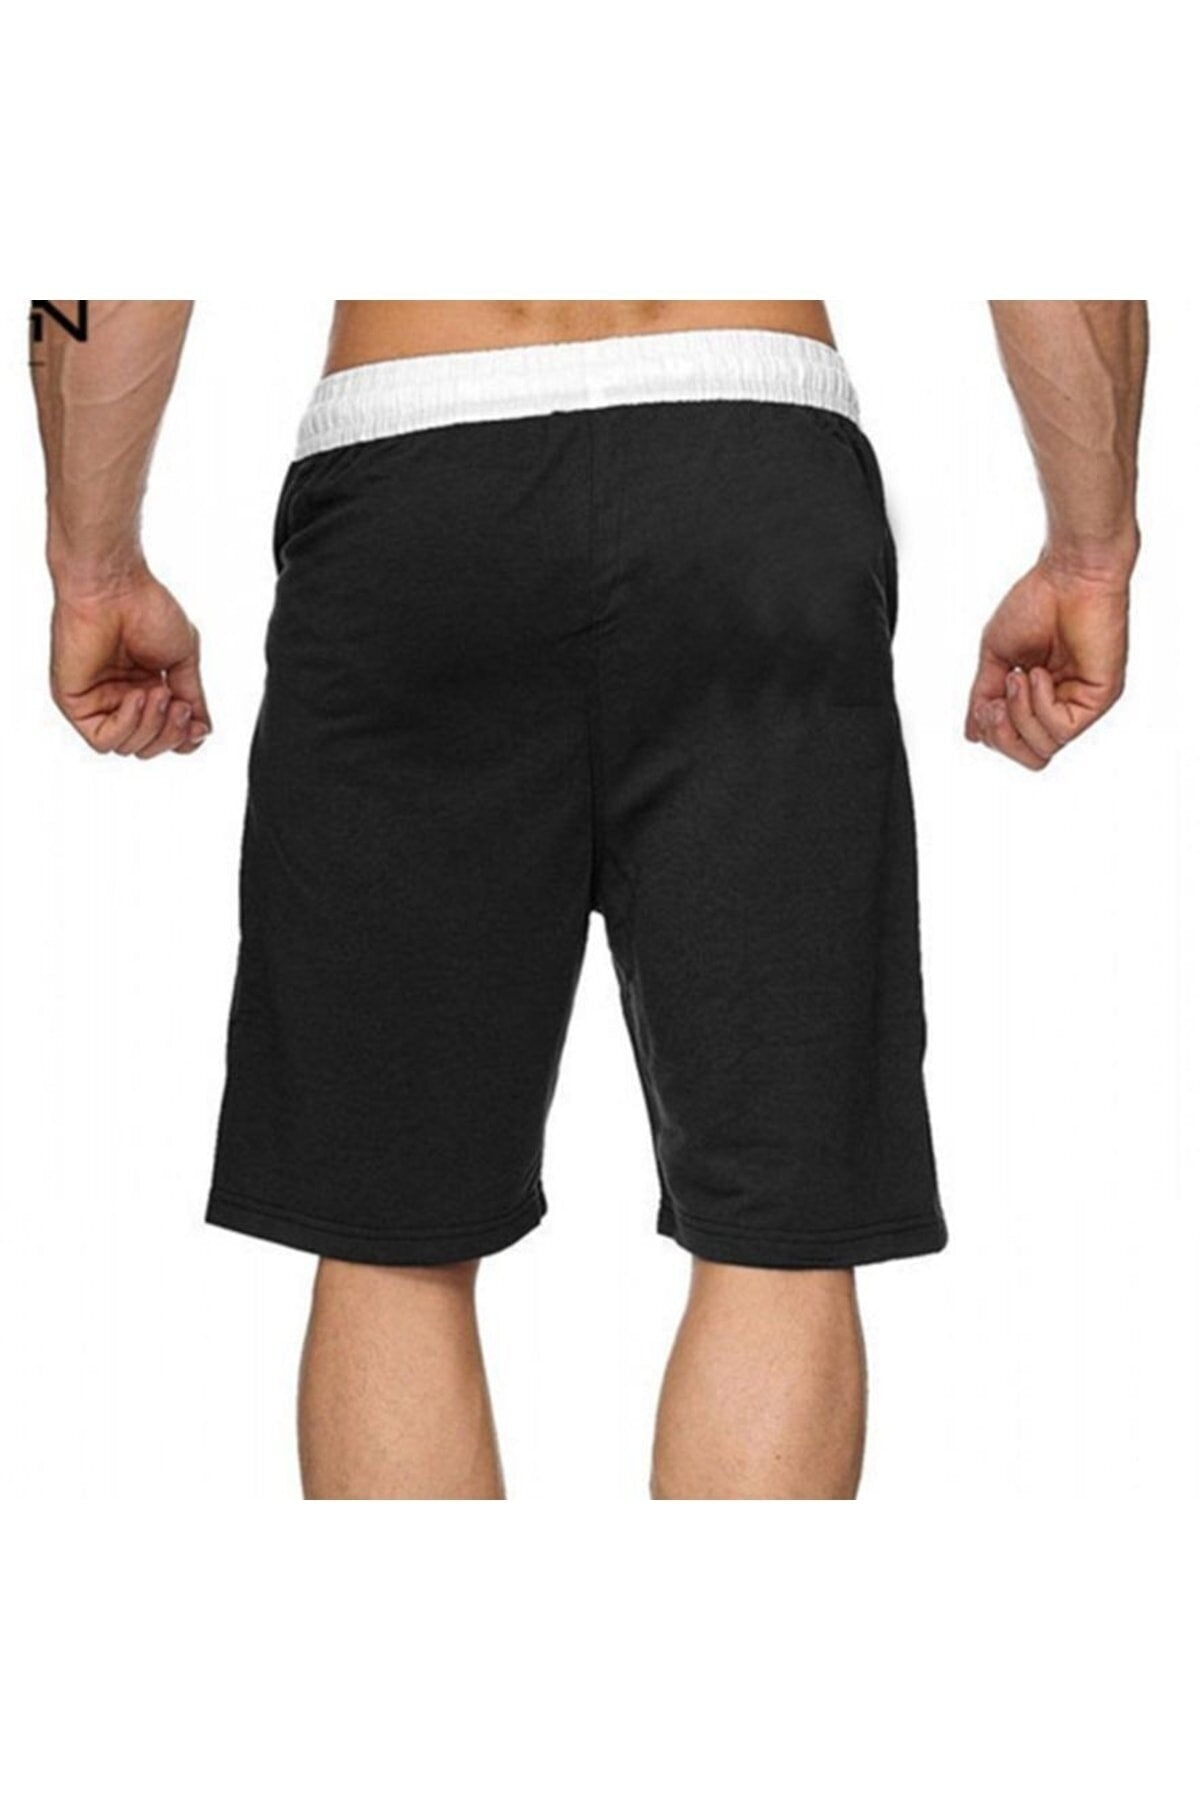 Jumpman Black Men's Pocket Detailed Printed Casual/Marine Shorts